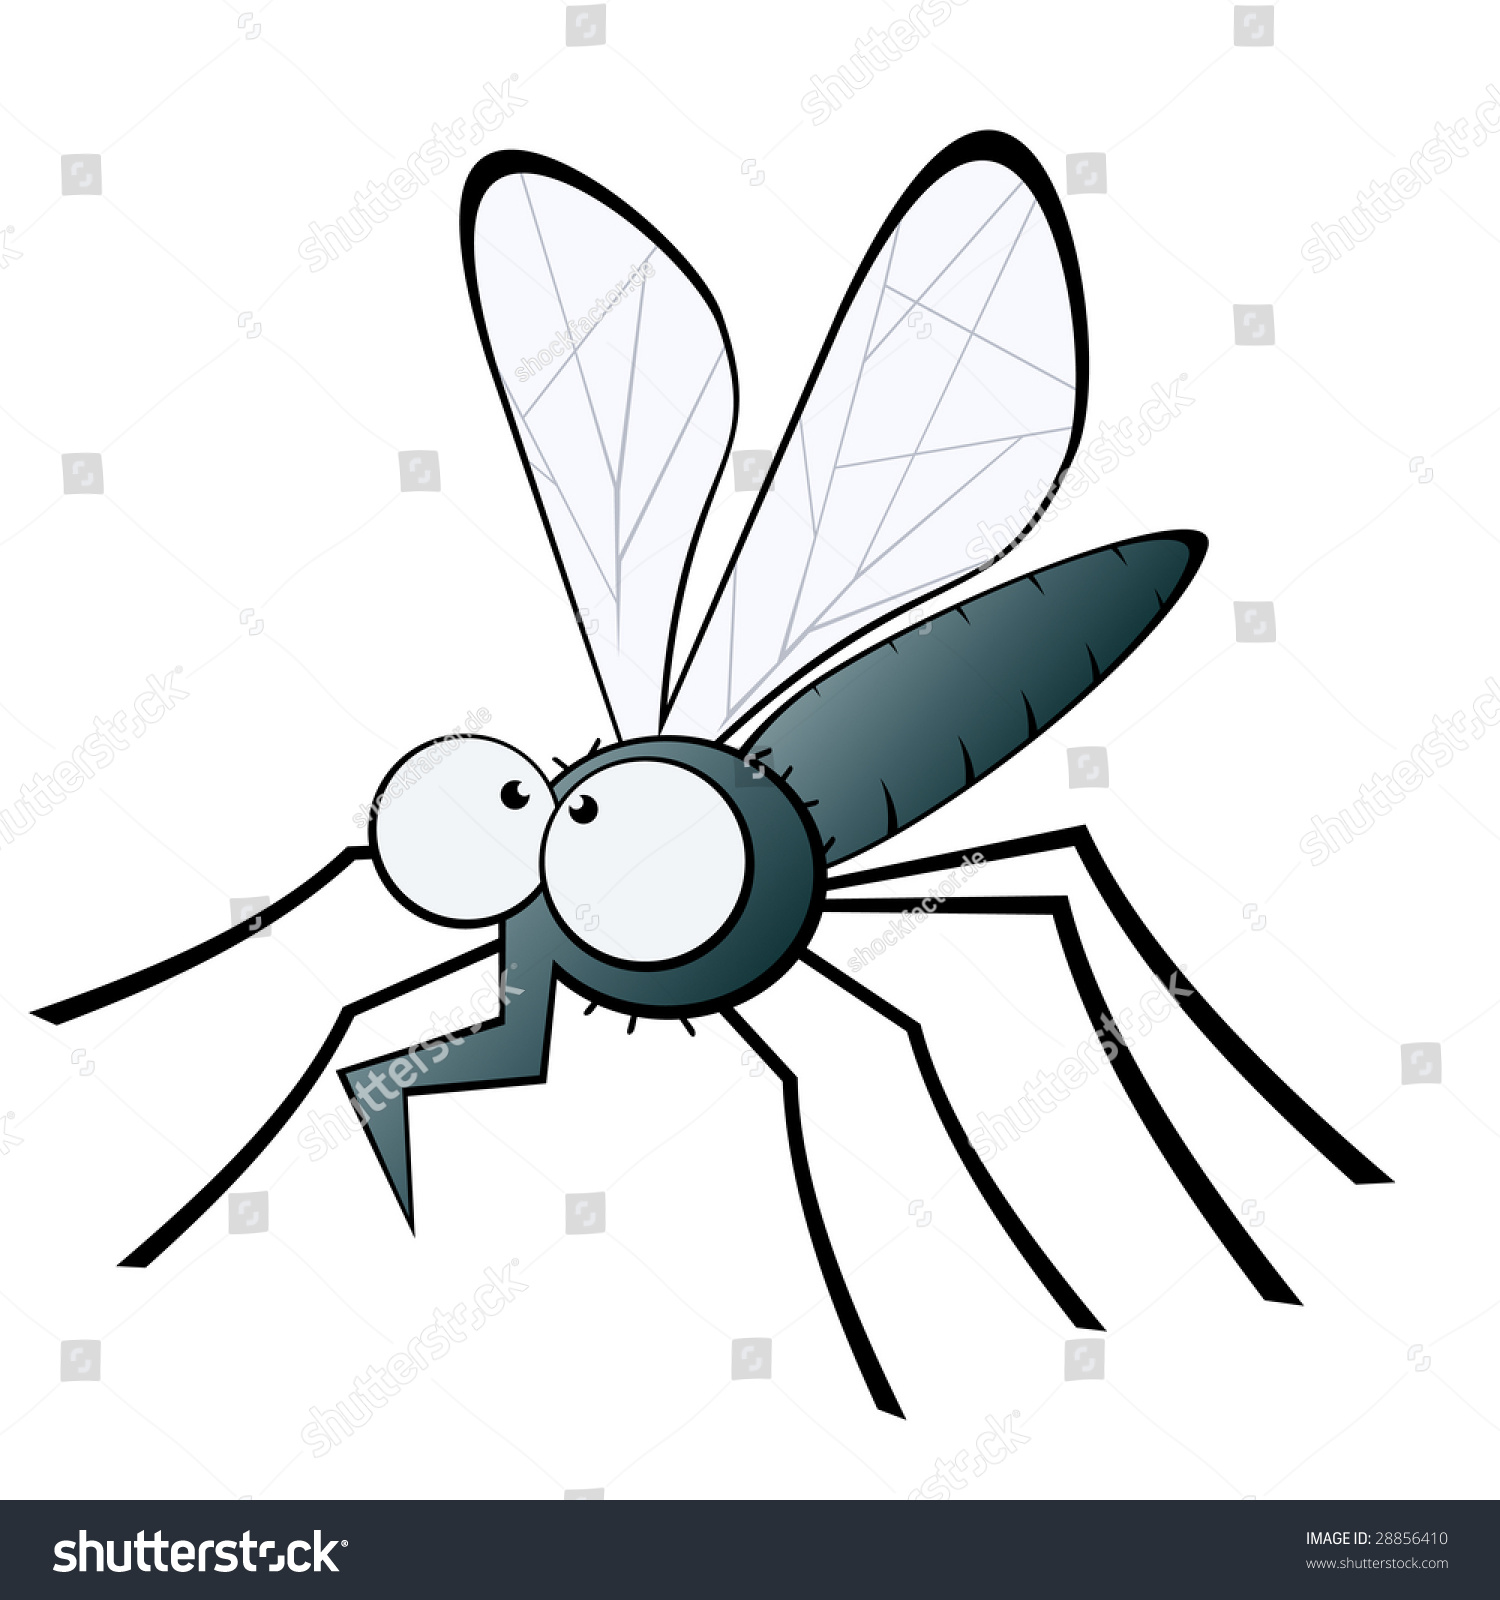 clipart mosquito cartoon - photo #33